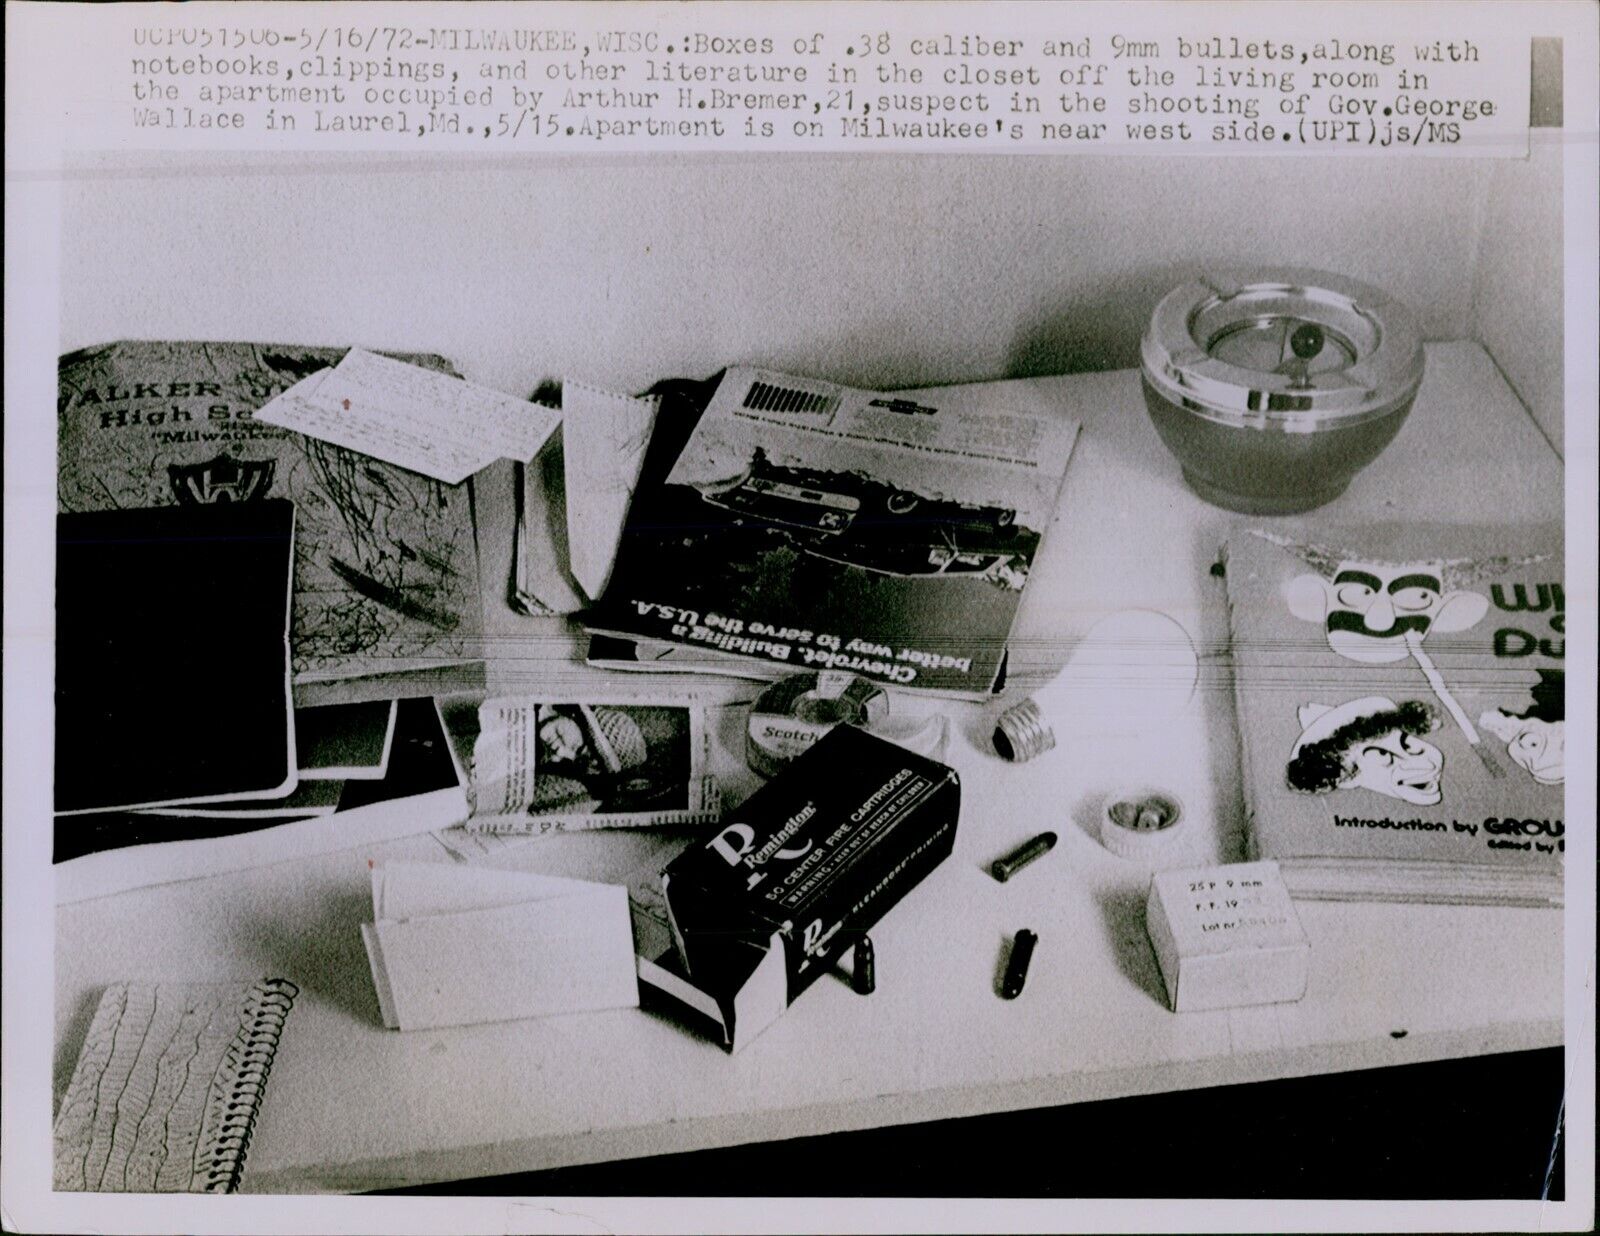 GA22 1972 Wire Photo HANDGUN BULLETS Ammunition Arthur Bremer Milwaukee Assassin